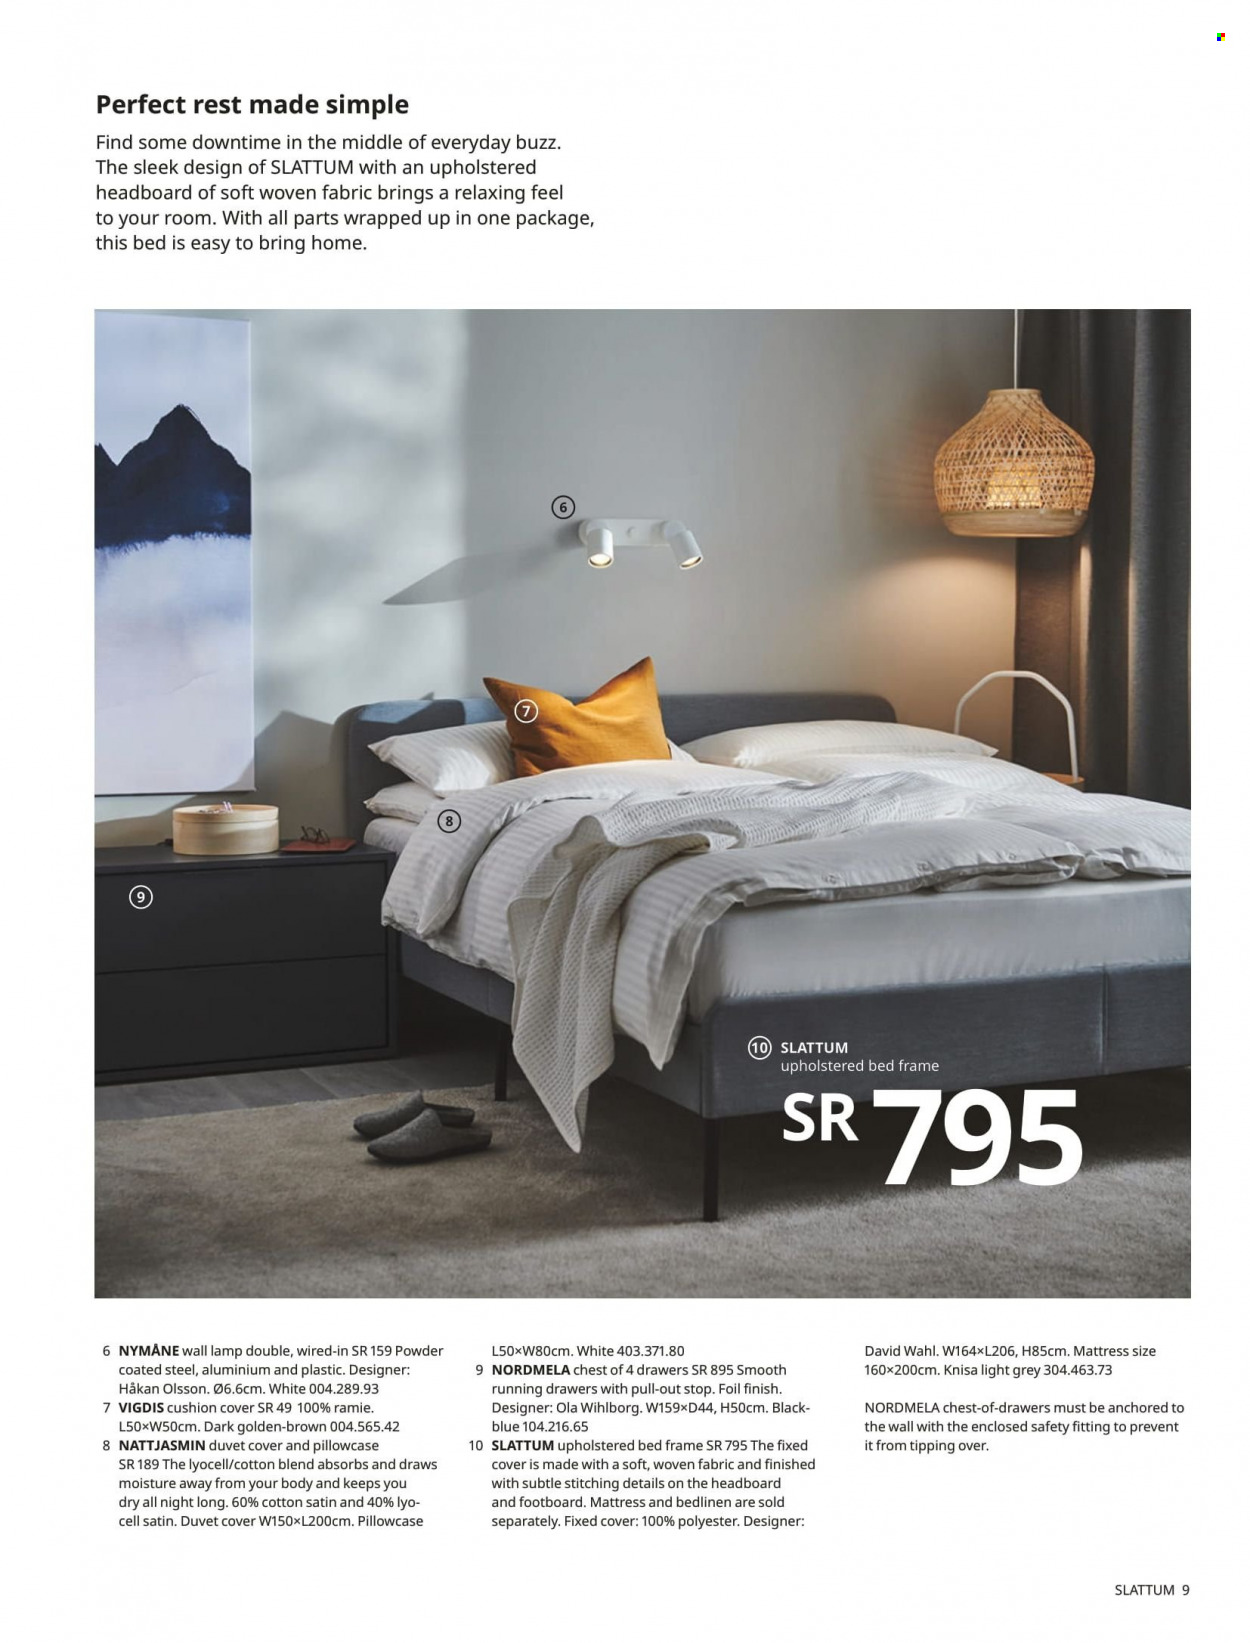 IKEA flyer . Page 9.